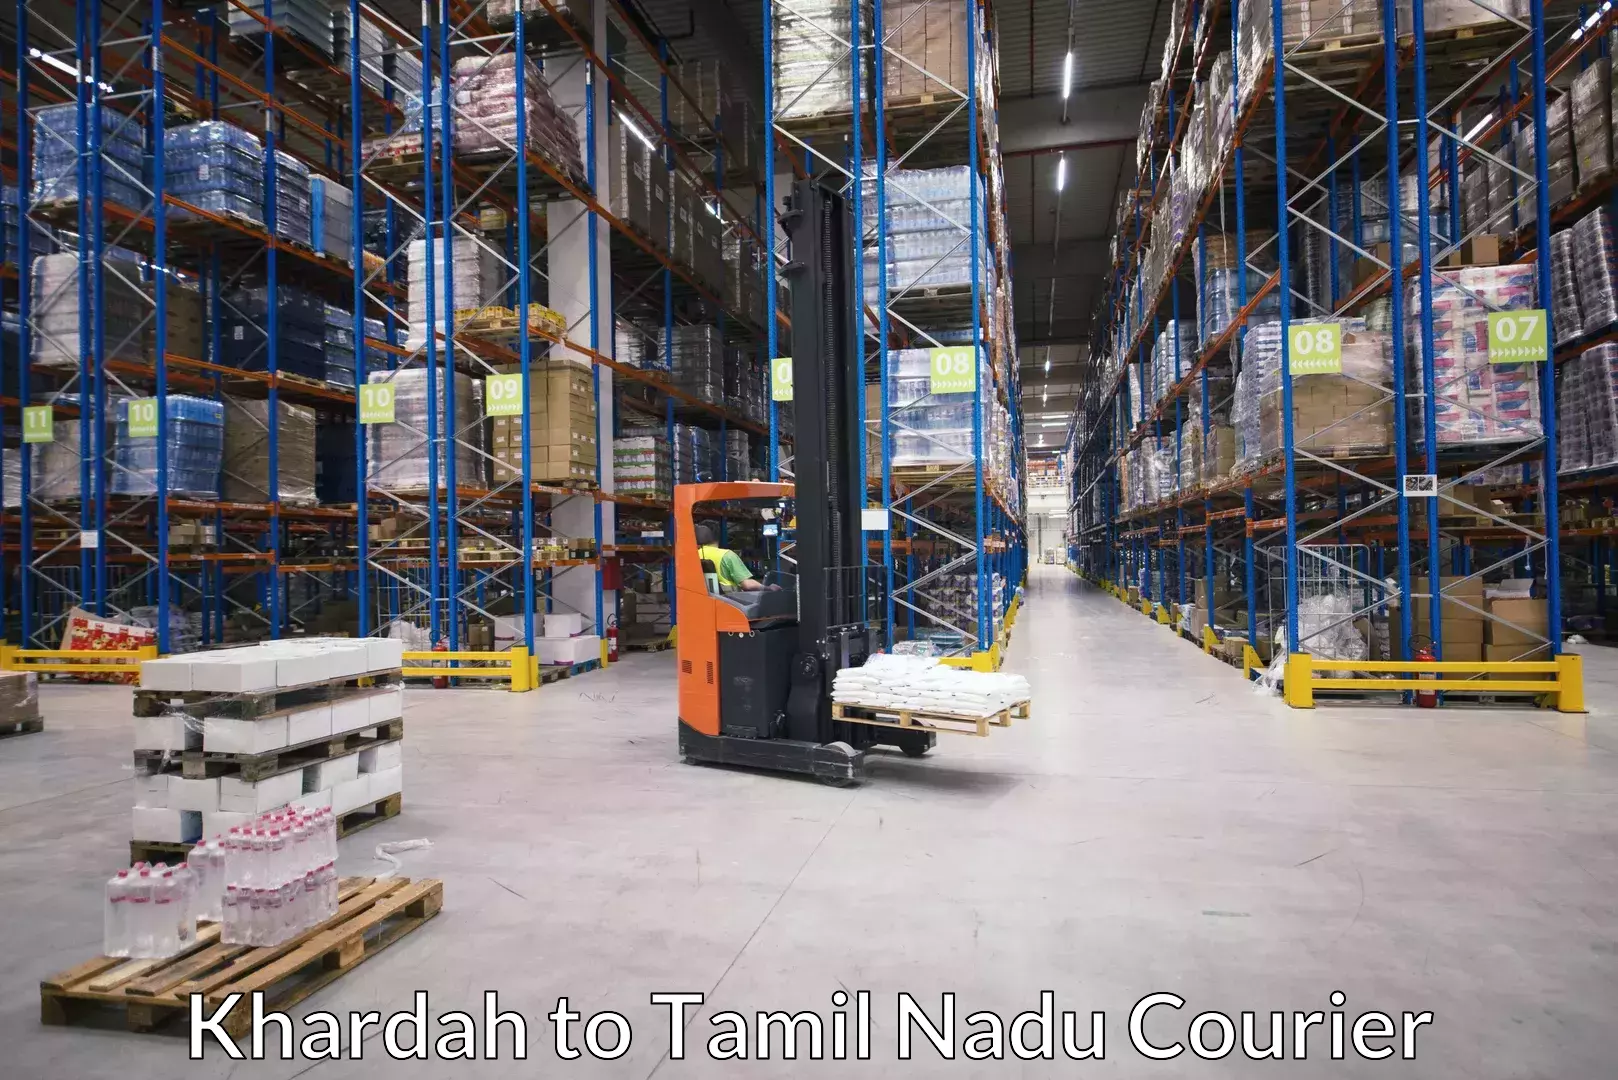 Luggage shipment specialists Khardah to Tamil Nadu